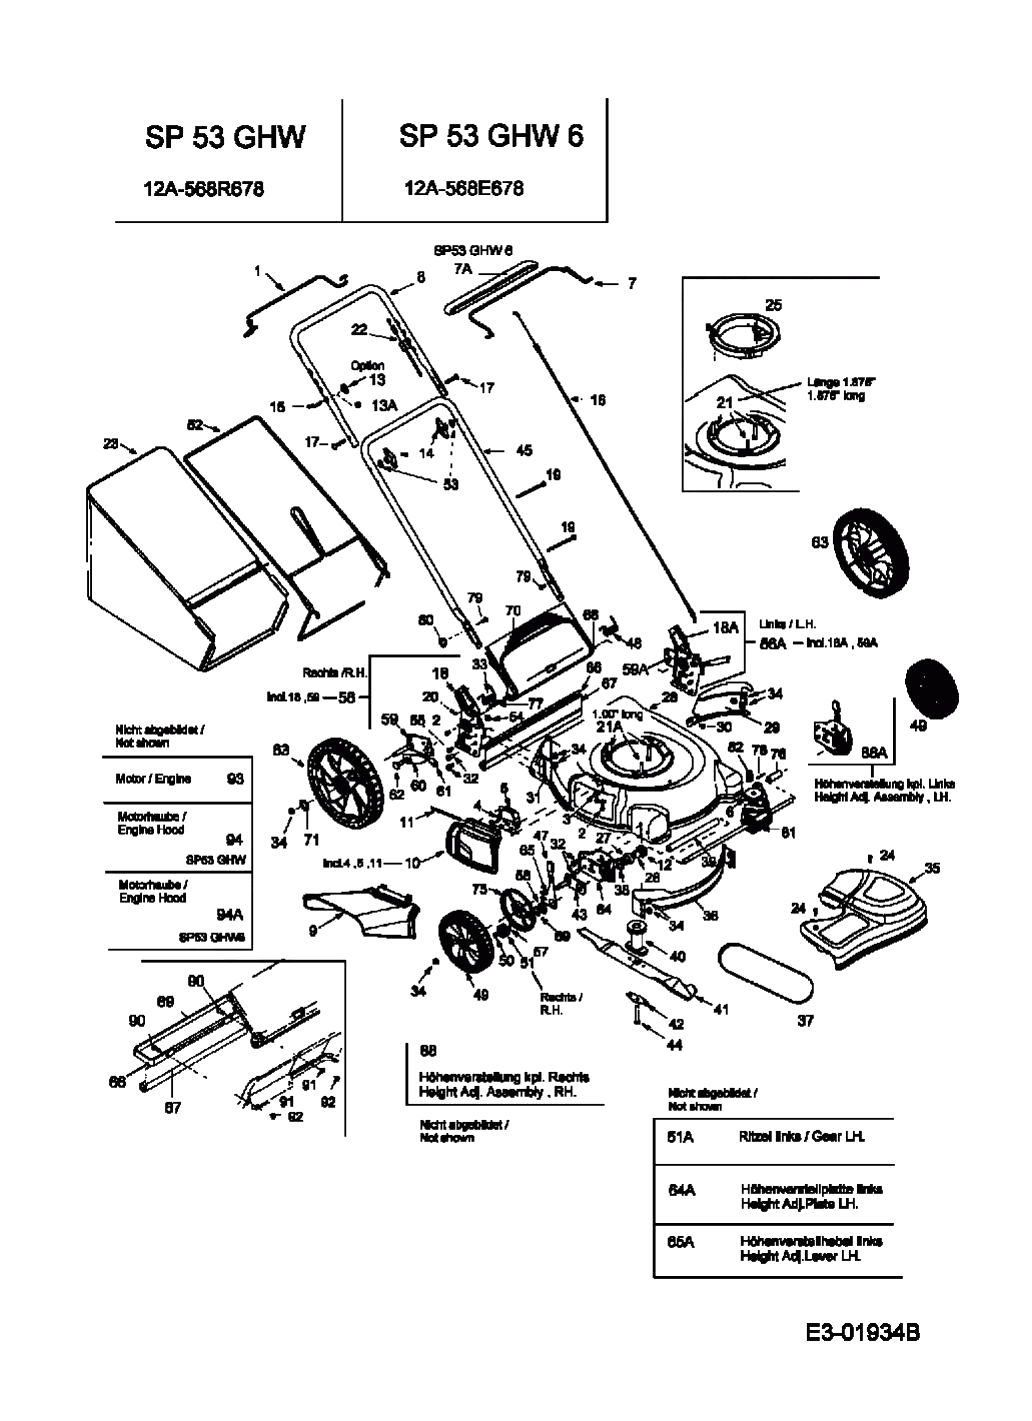 MTD Артикул 12A-568E678 (год выпуска 2005). Основная деталировка